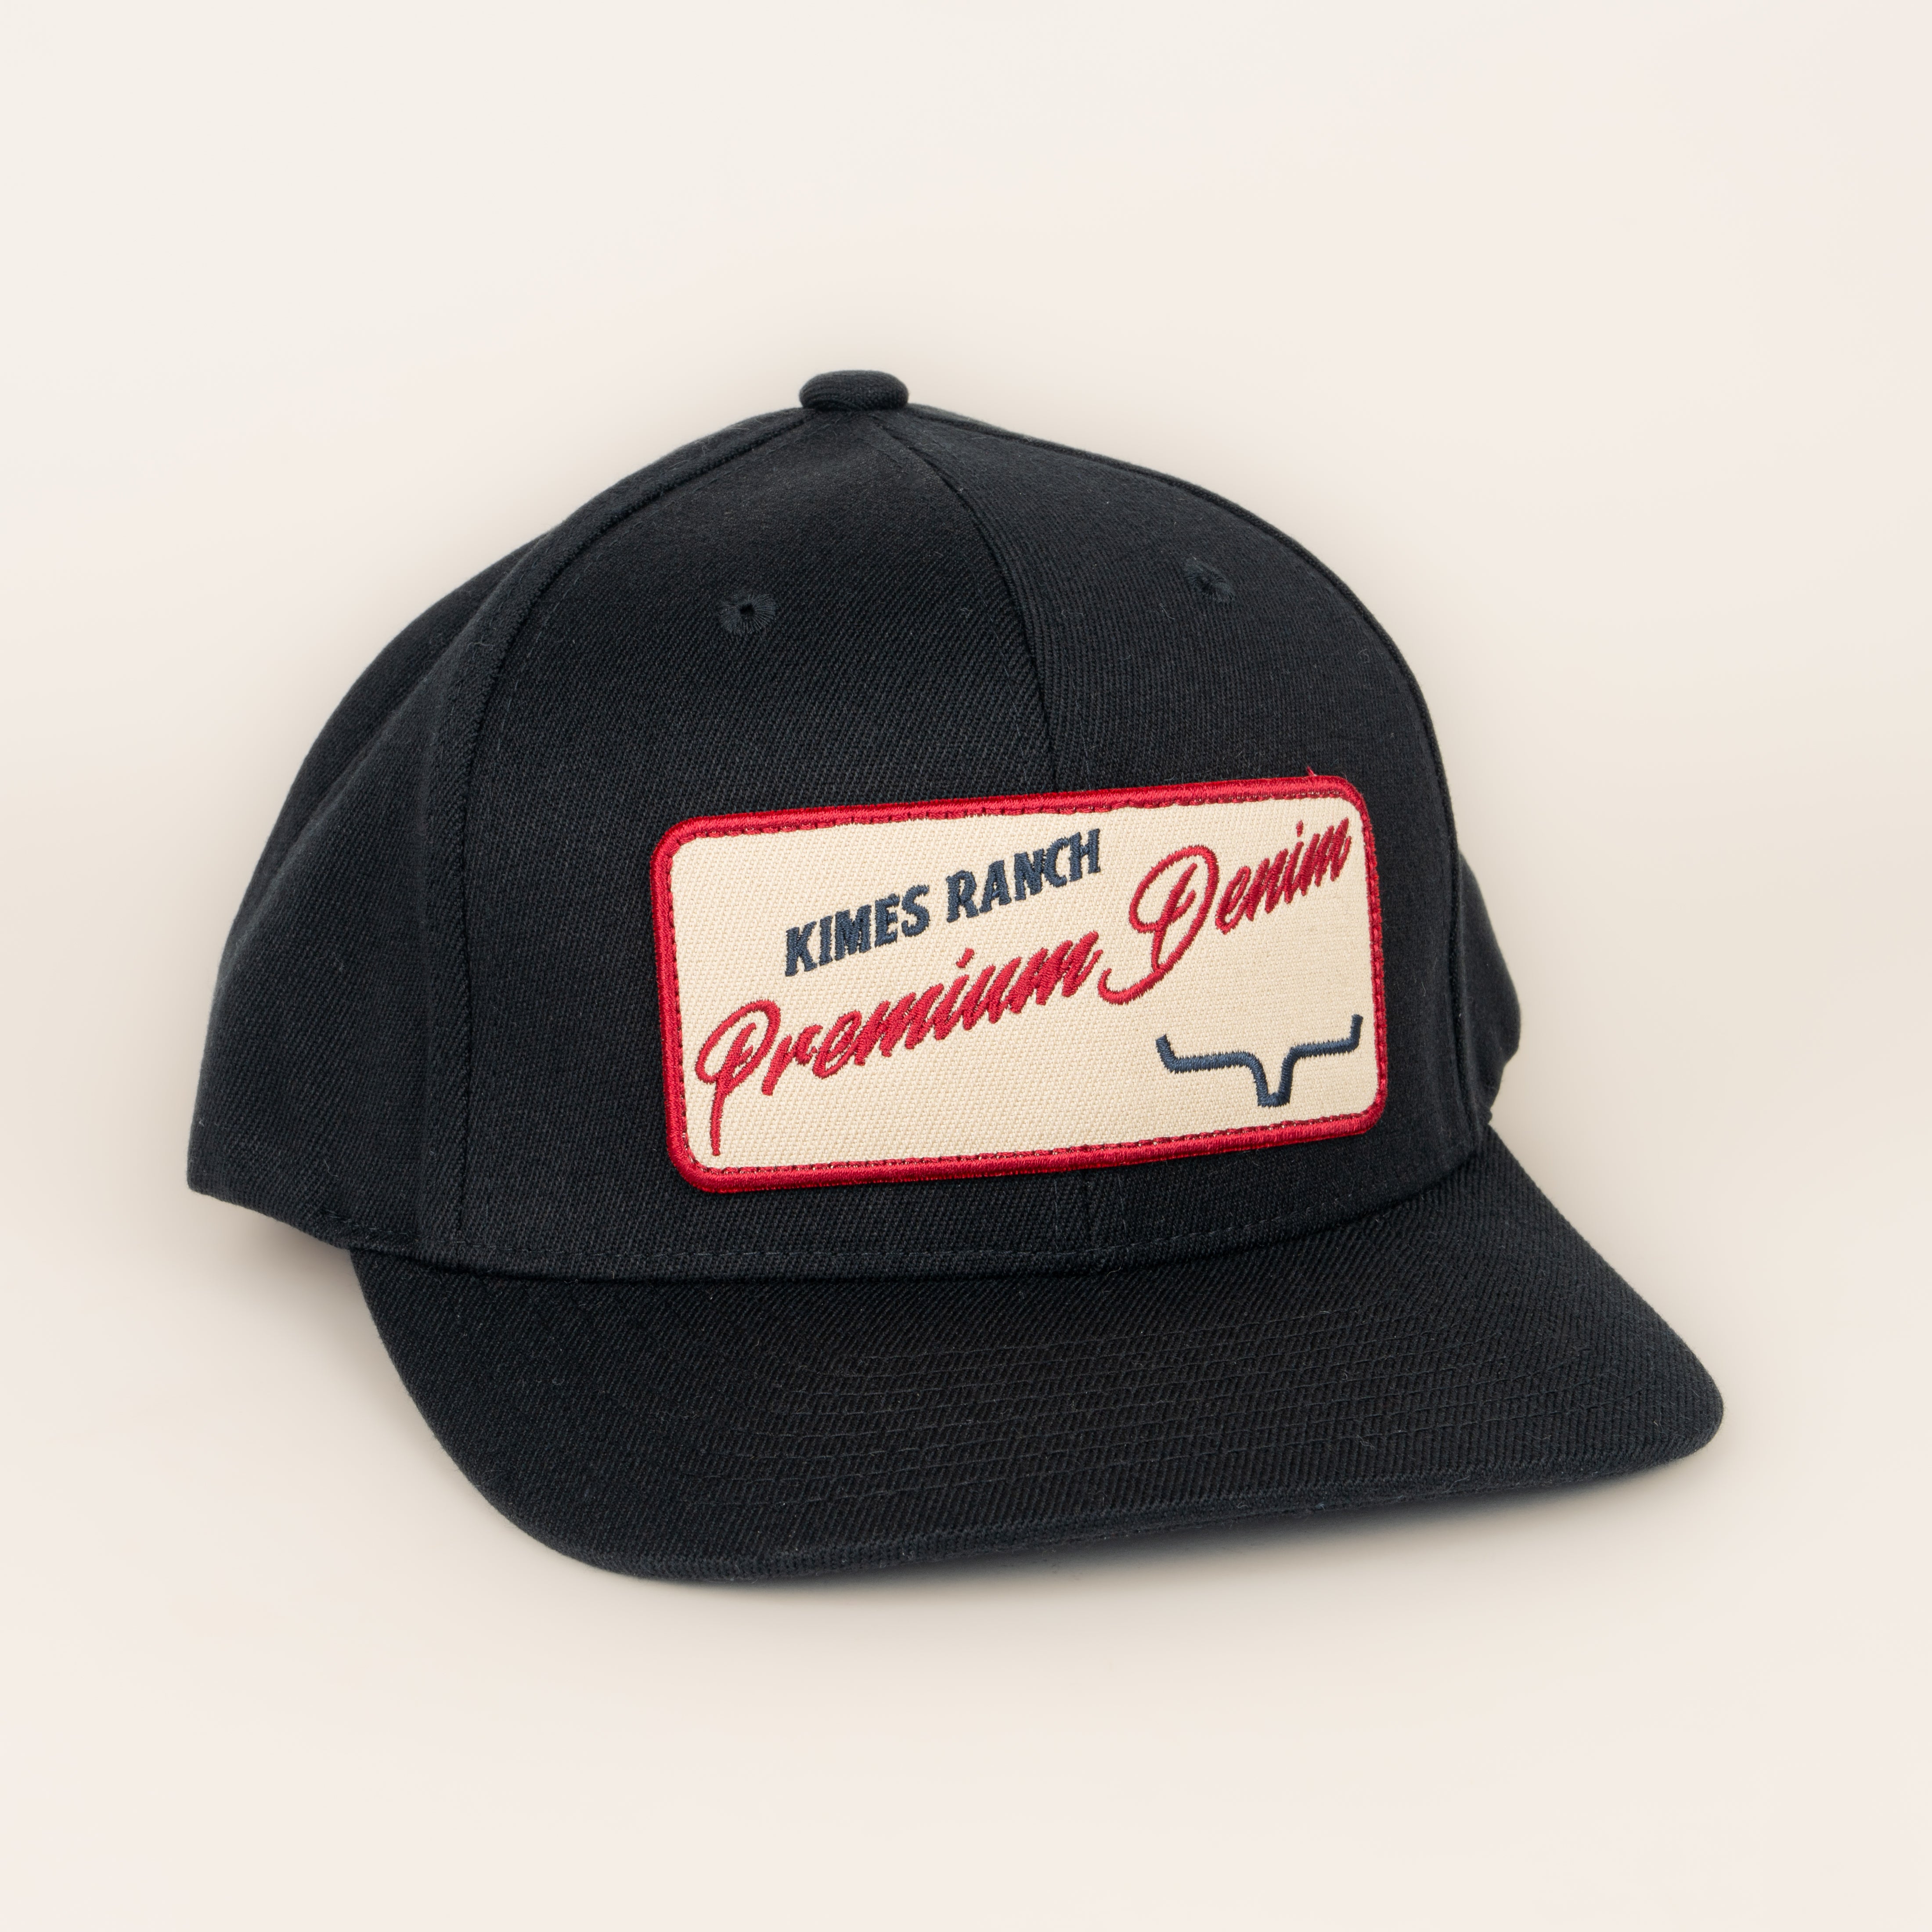 Gorra Kimes Ranch Premium Denim Hat Black